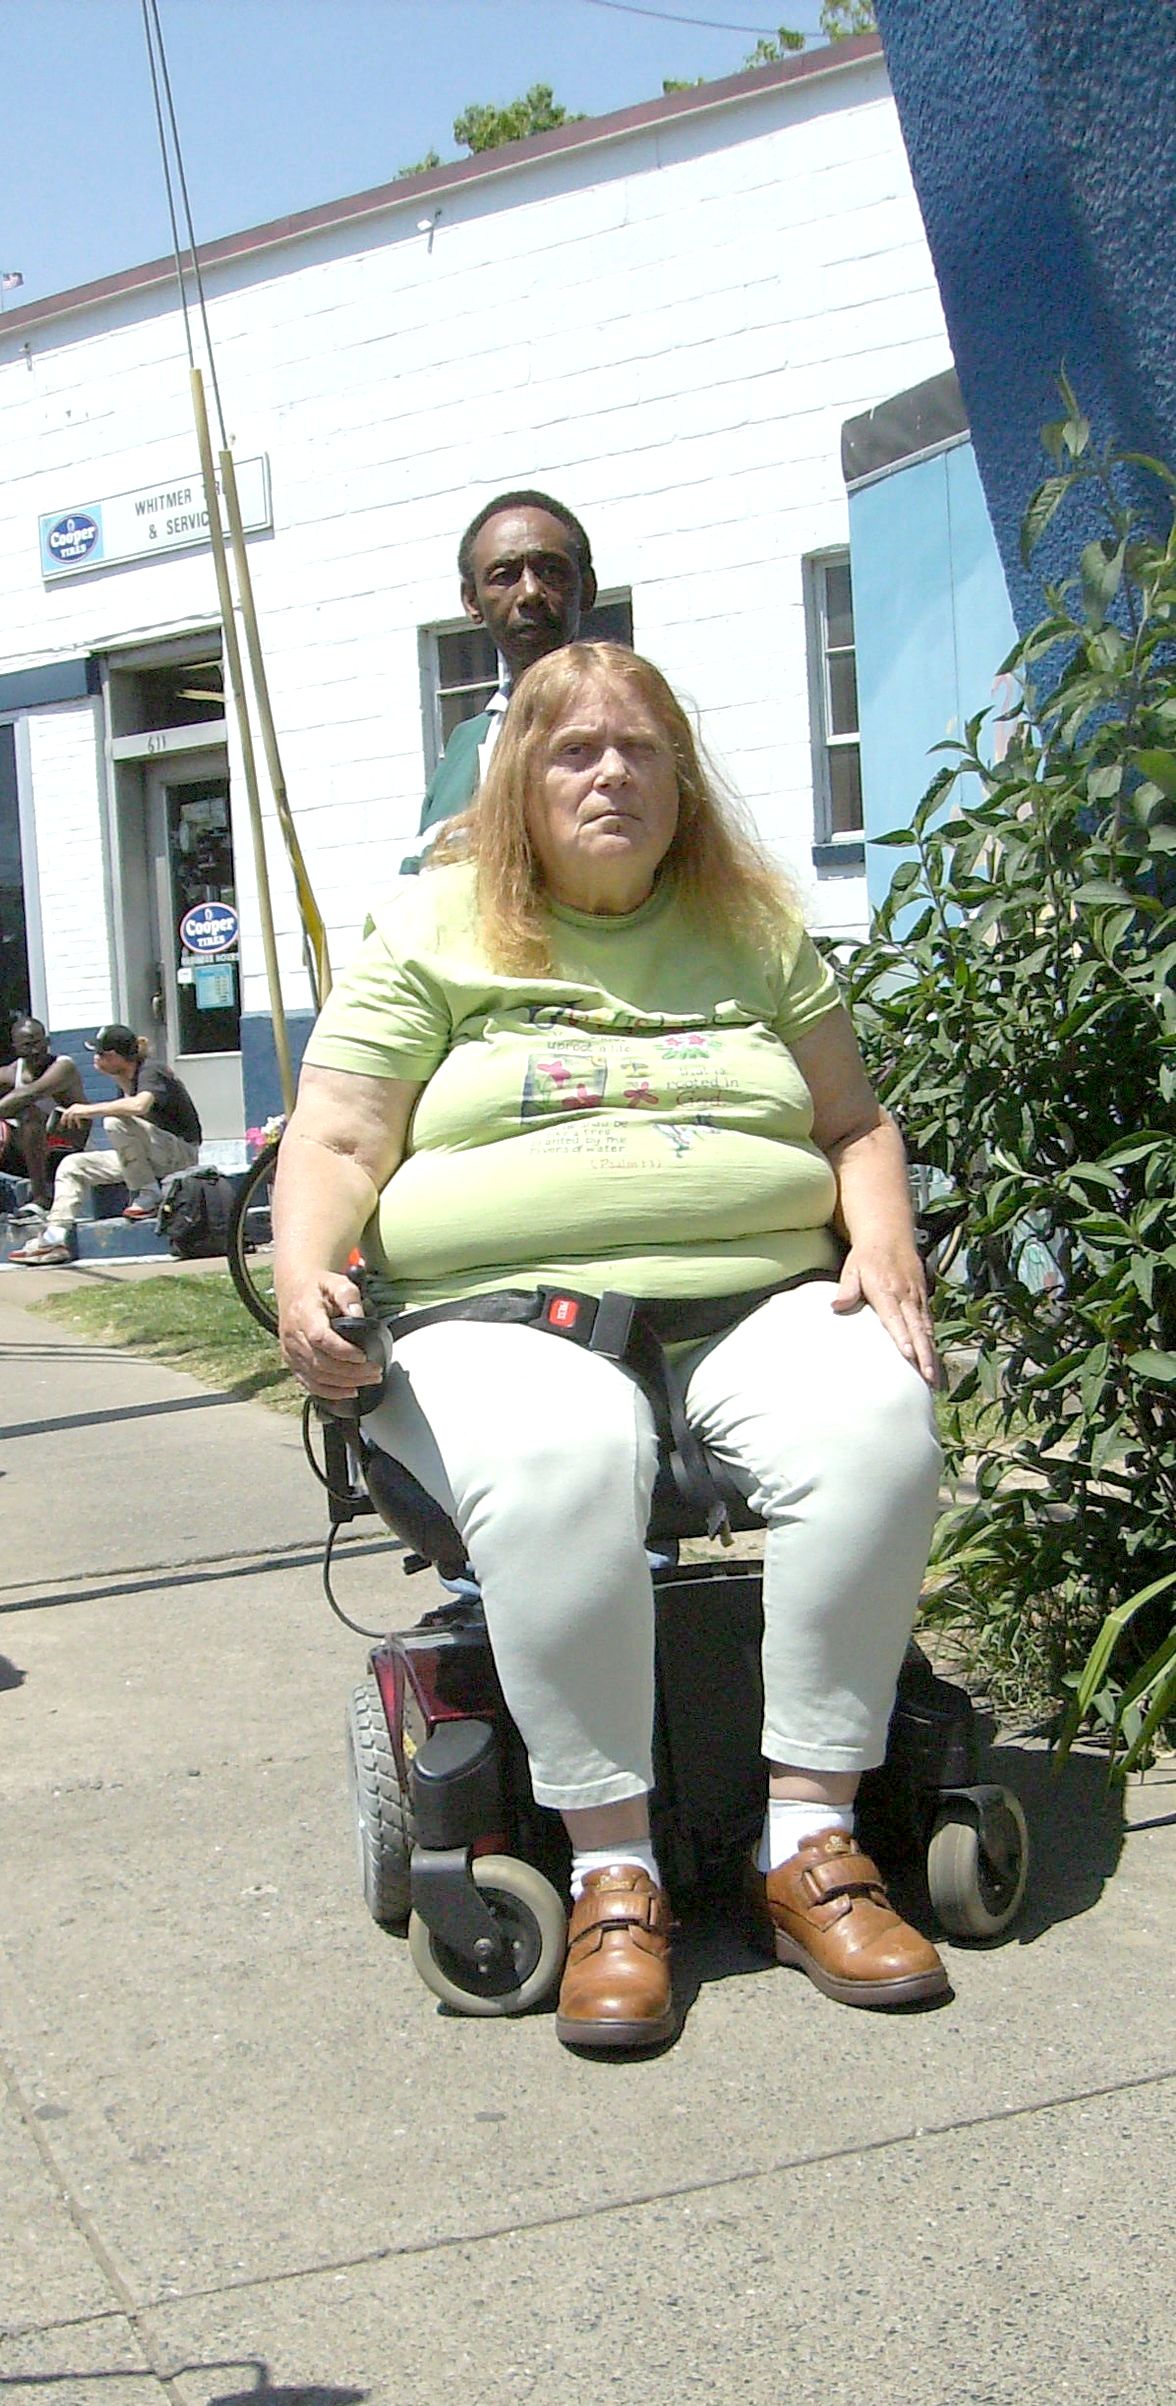 File:Woman in wheelchair.jpg - Wikimedia Commons